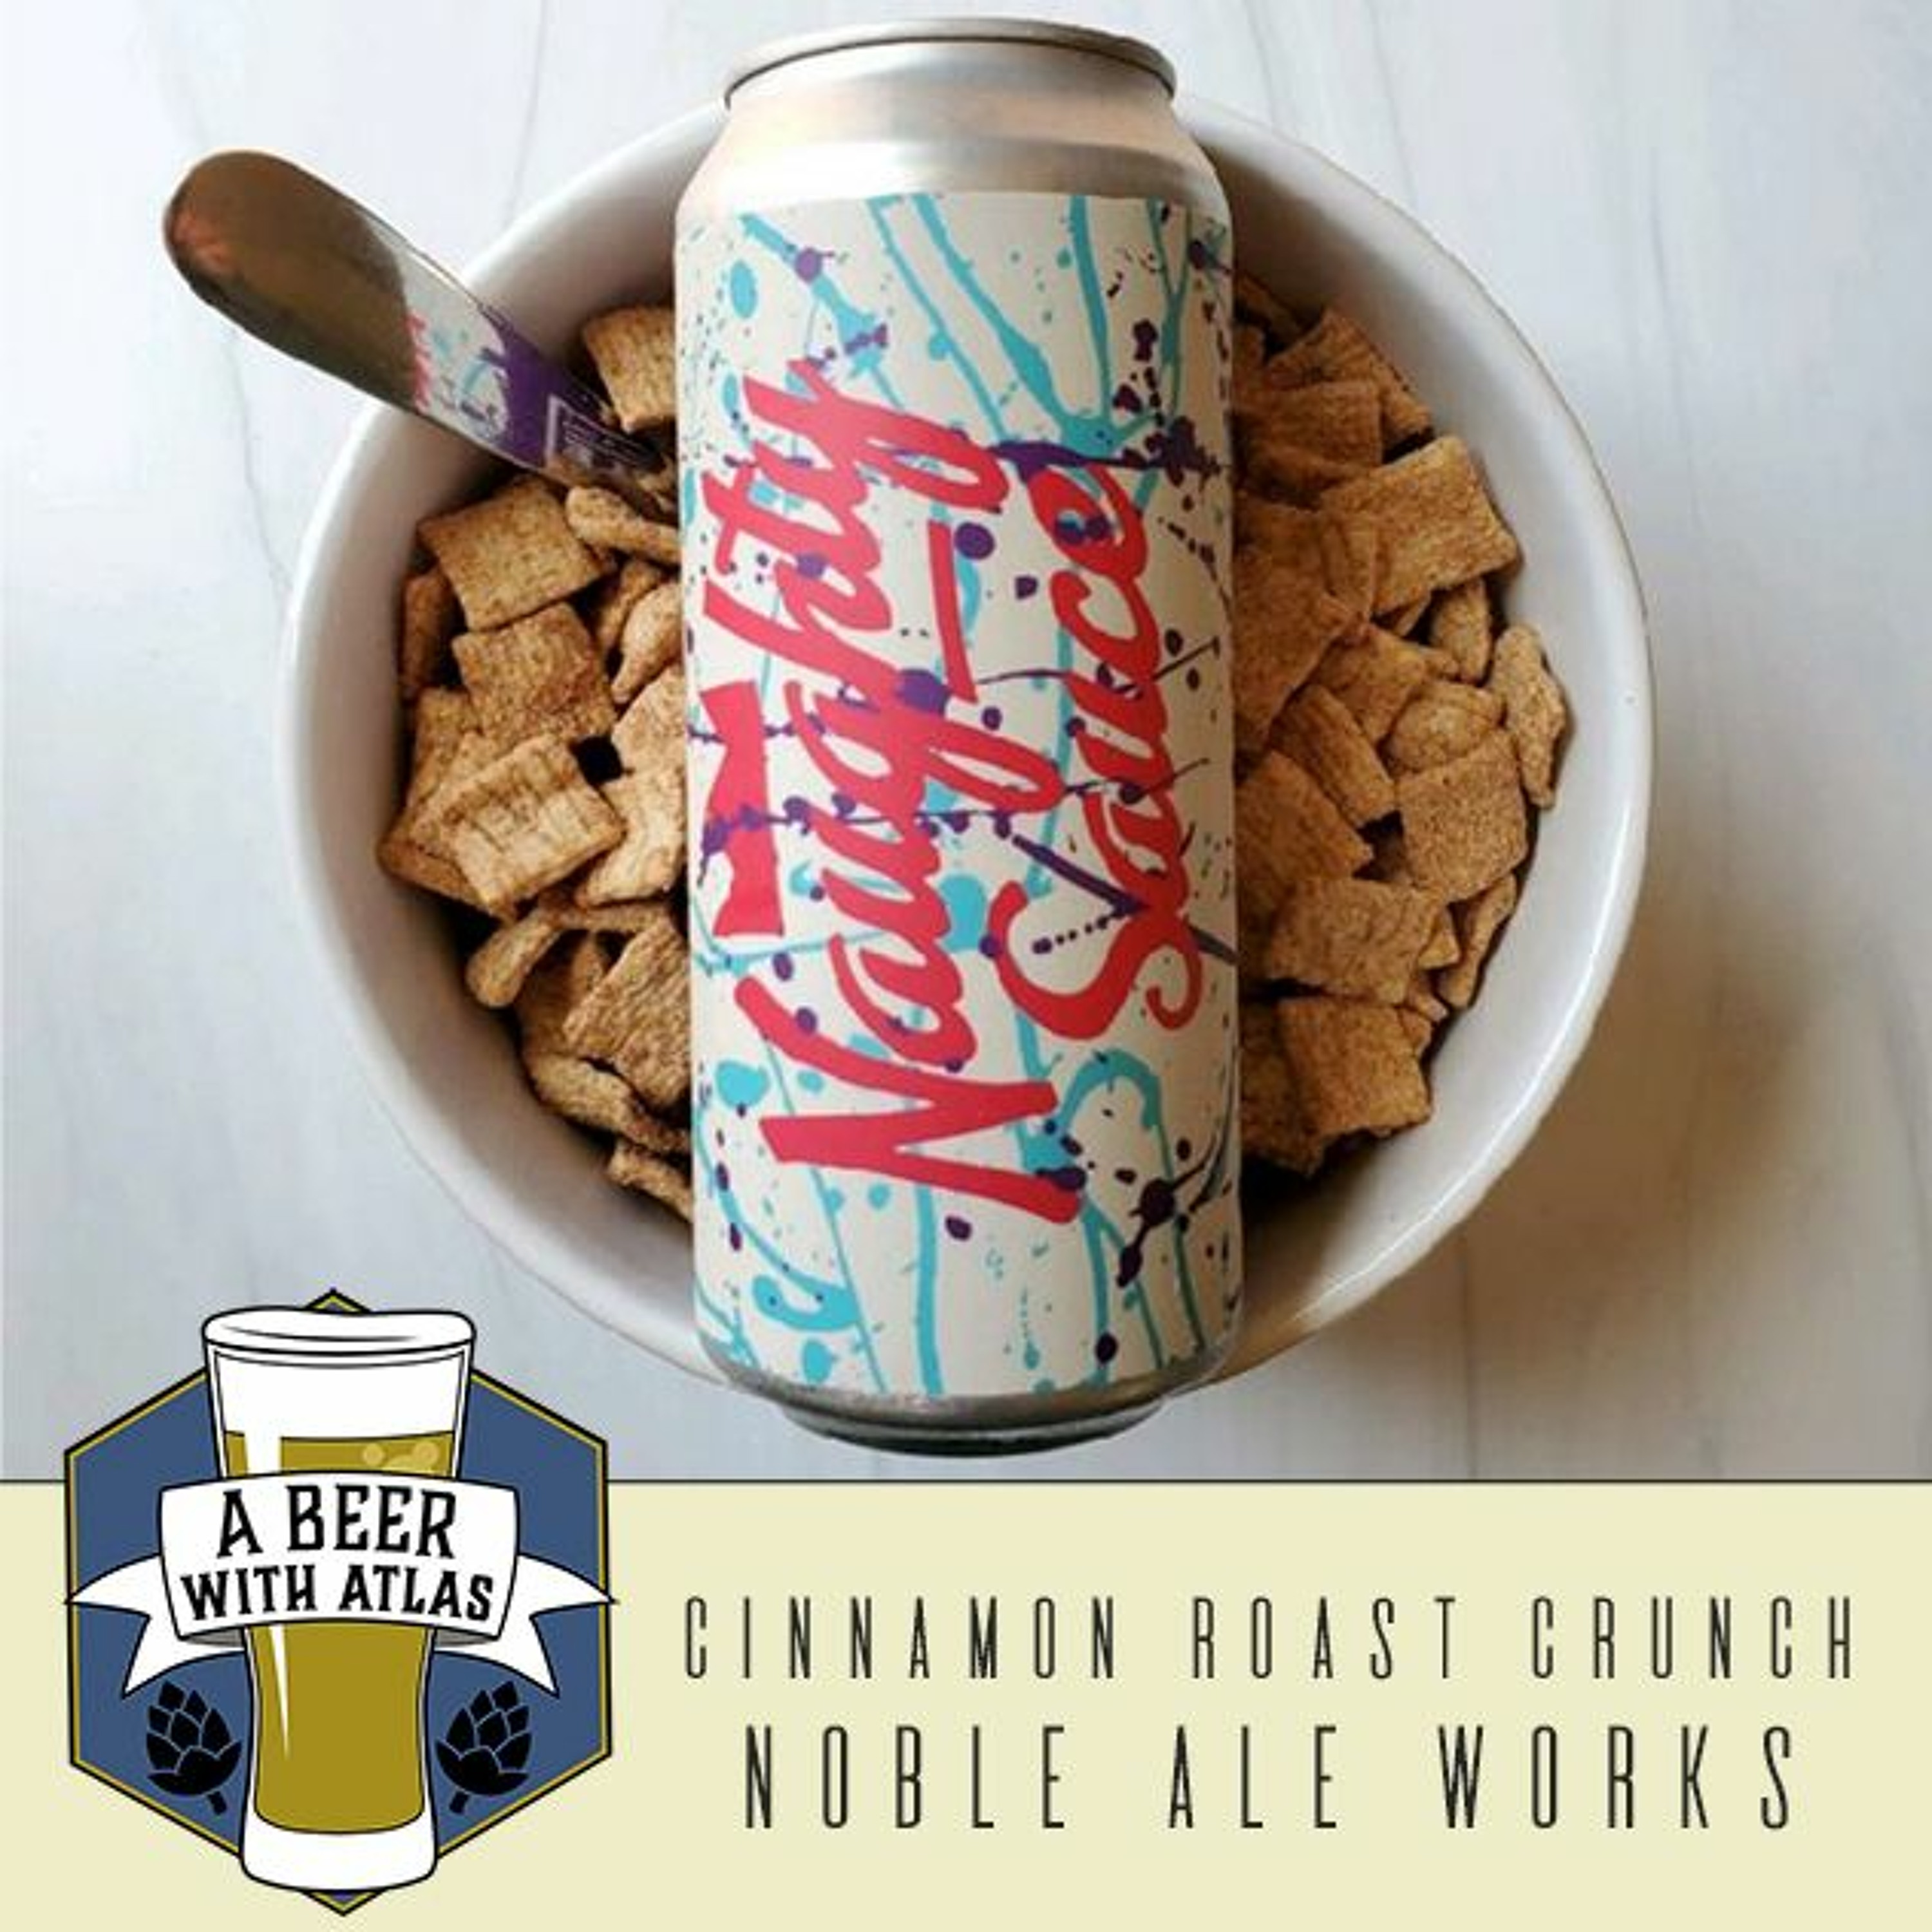 Cinnamon Roast Crunch, Naughty Sauce series from Noble Ale Works - Beer With Atlas 109